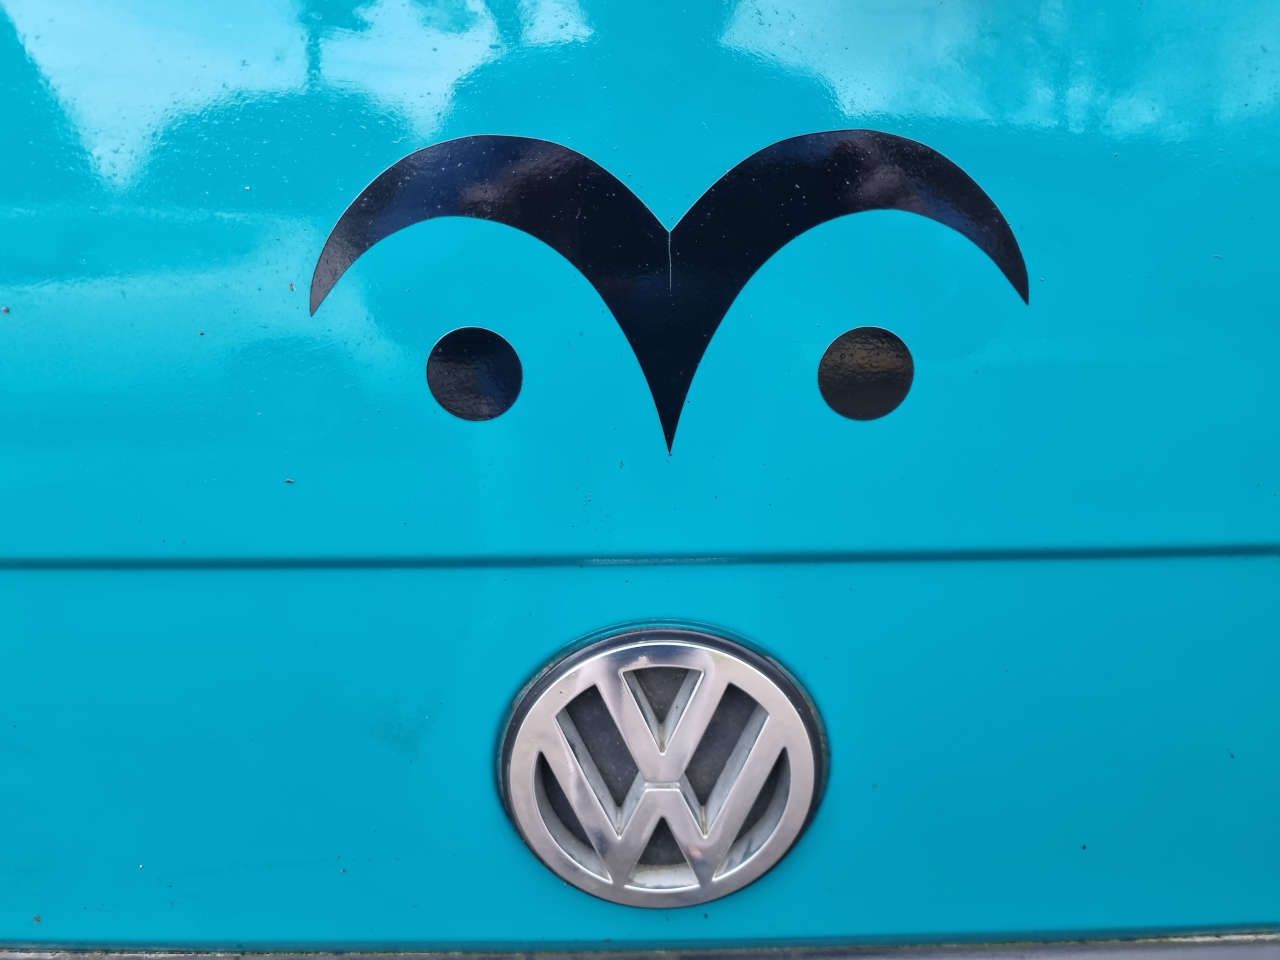 Eye symbol logo with VW logo beneath it